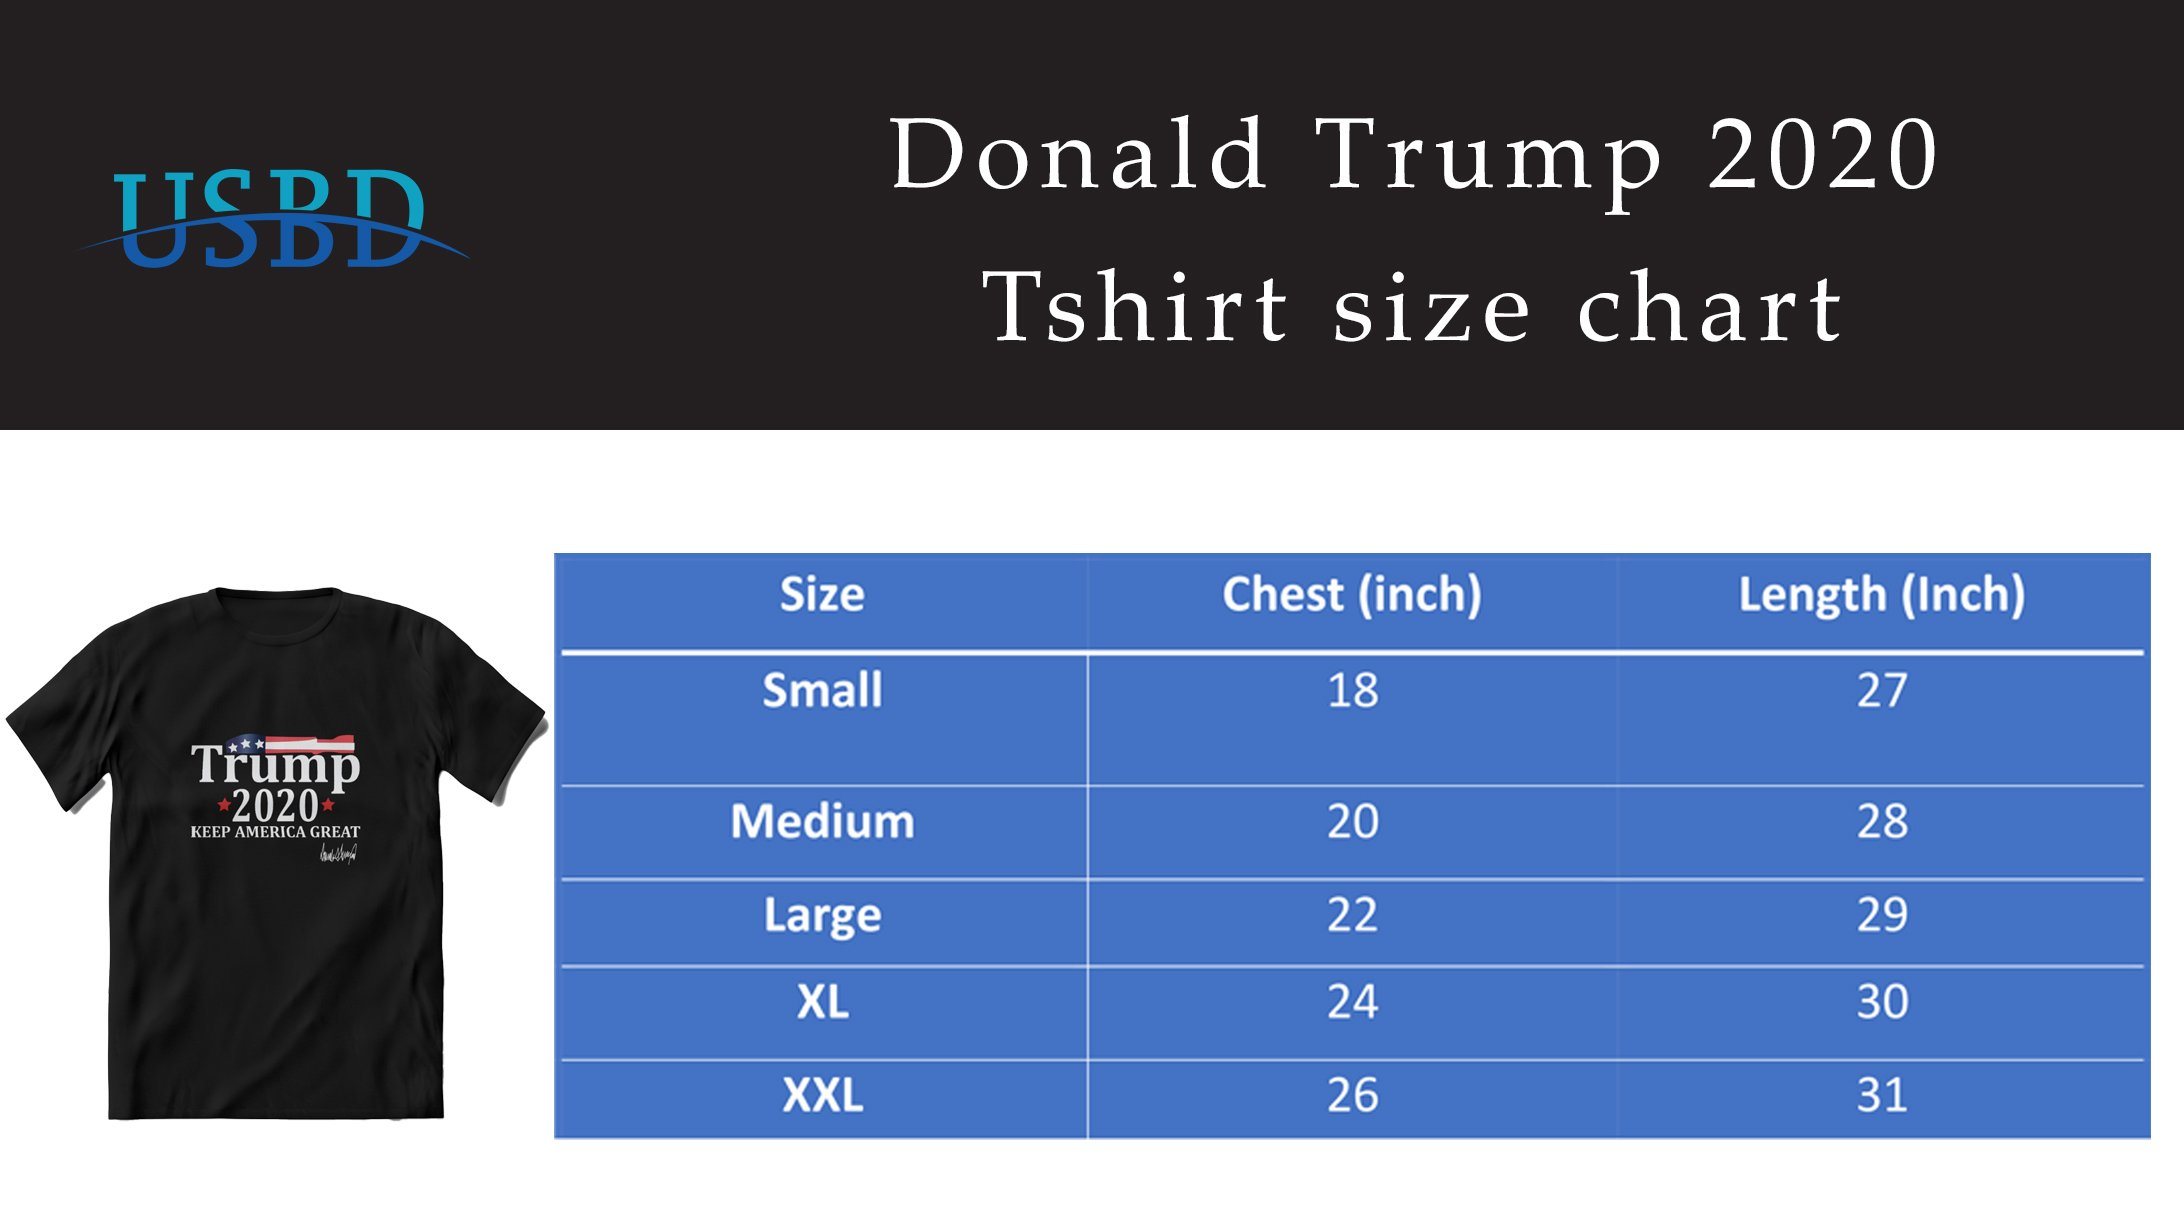 Donald Trump 2020 Keep America Great Signature Election Tshirt Men women Unisex t shirt tees shirt USBD 